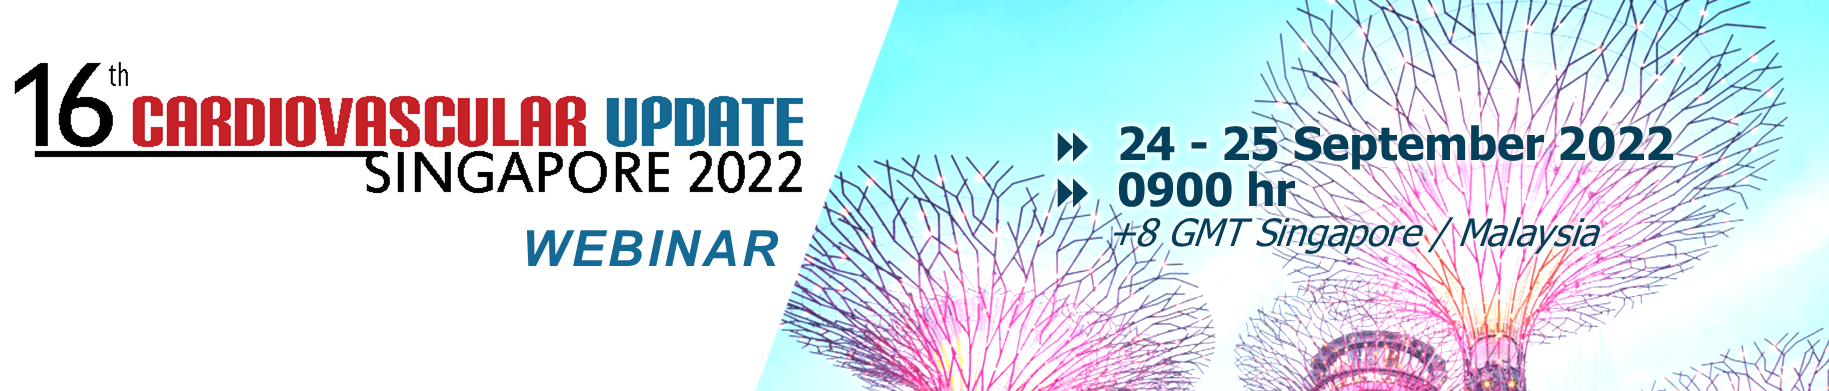 Cardiovascular update singapore 2022 Masthead